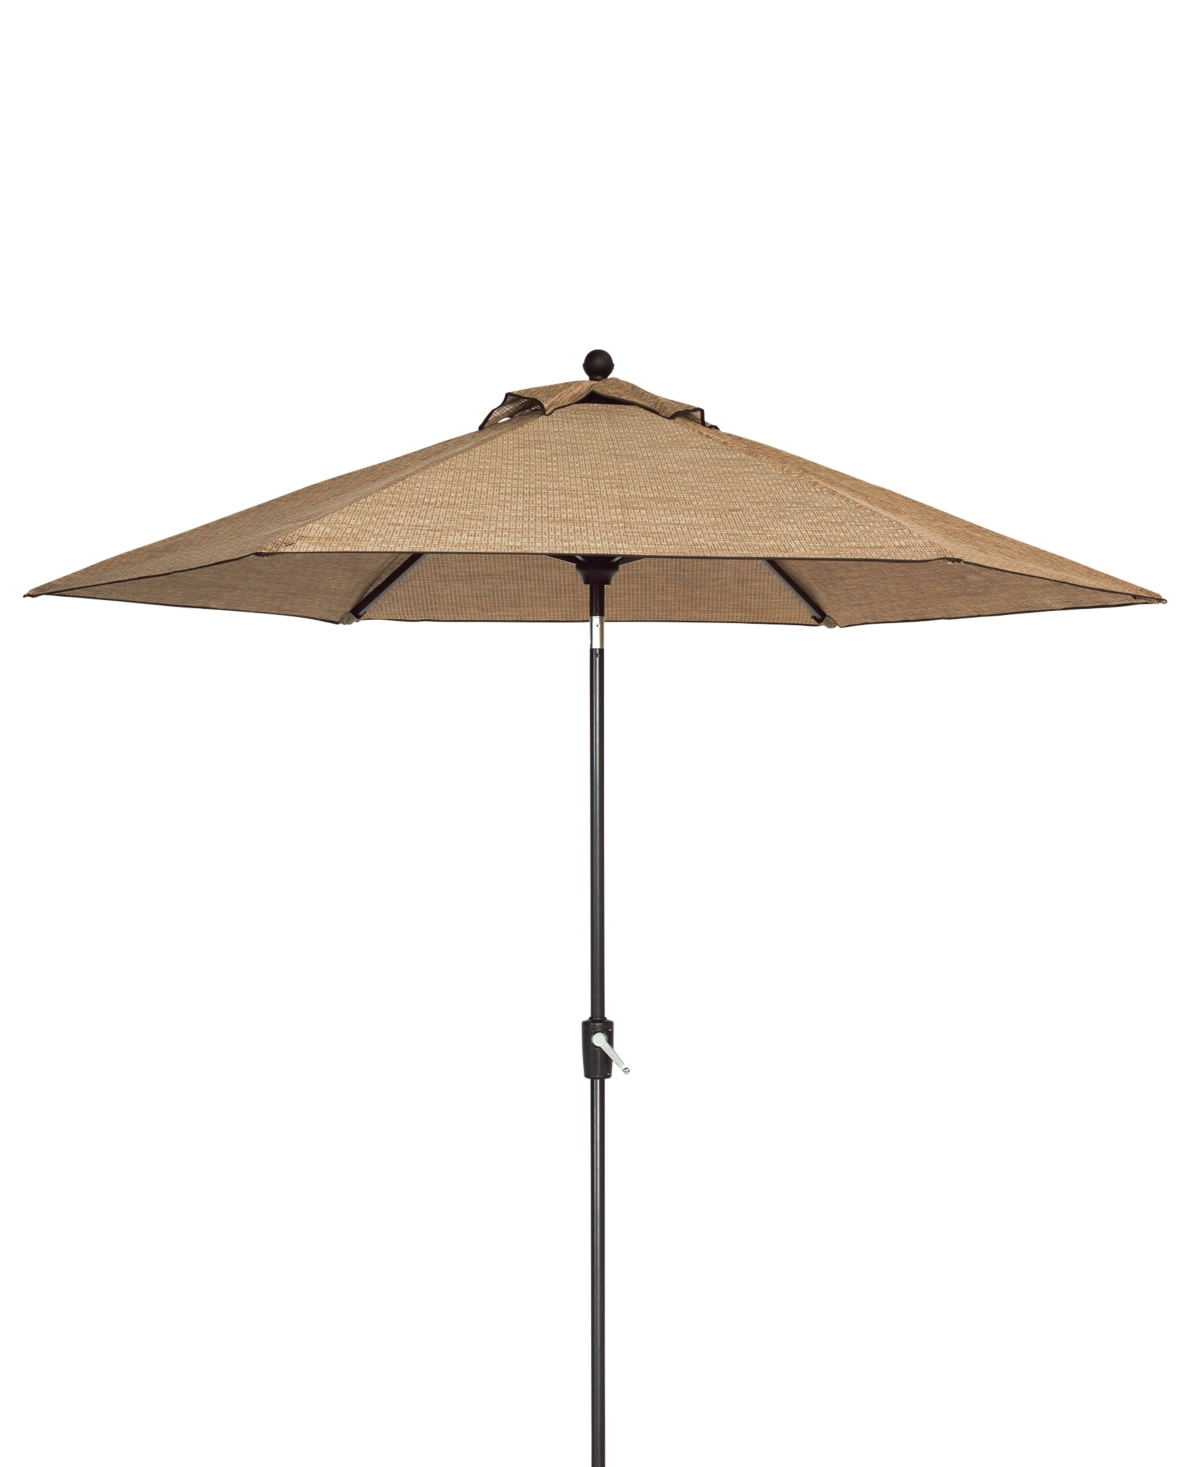 Beachmont Ii Outdoor 9 Auto-Tilt Patio Umbrella, Created for Macys